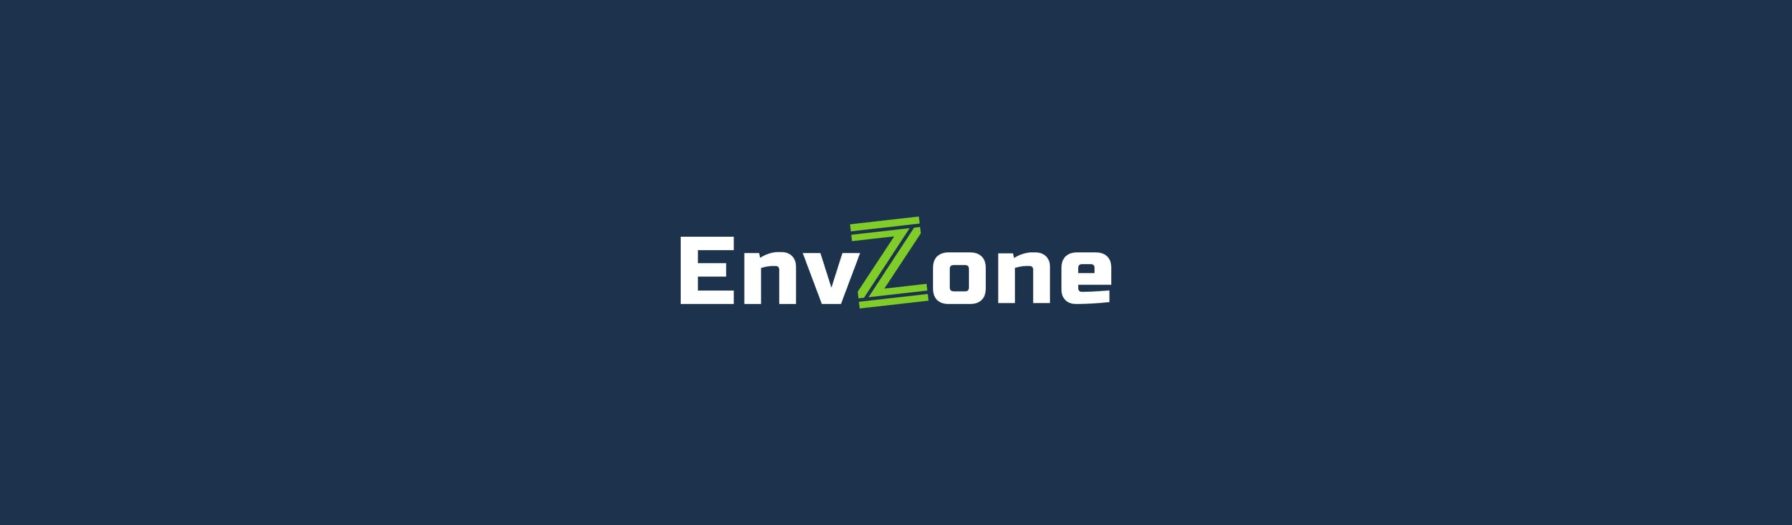  EnvZone logo